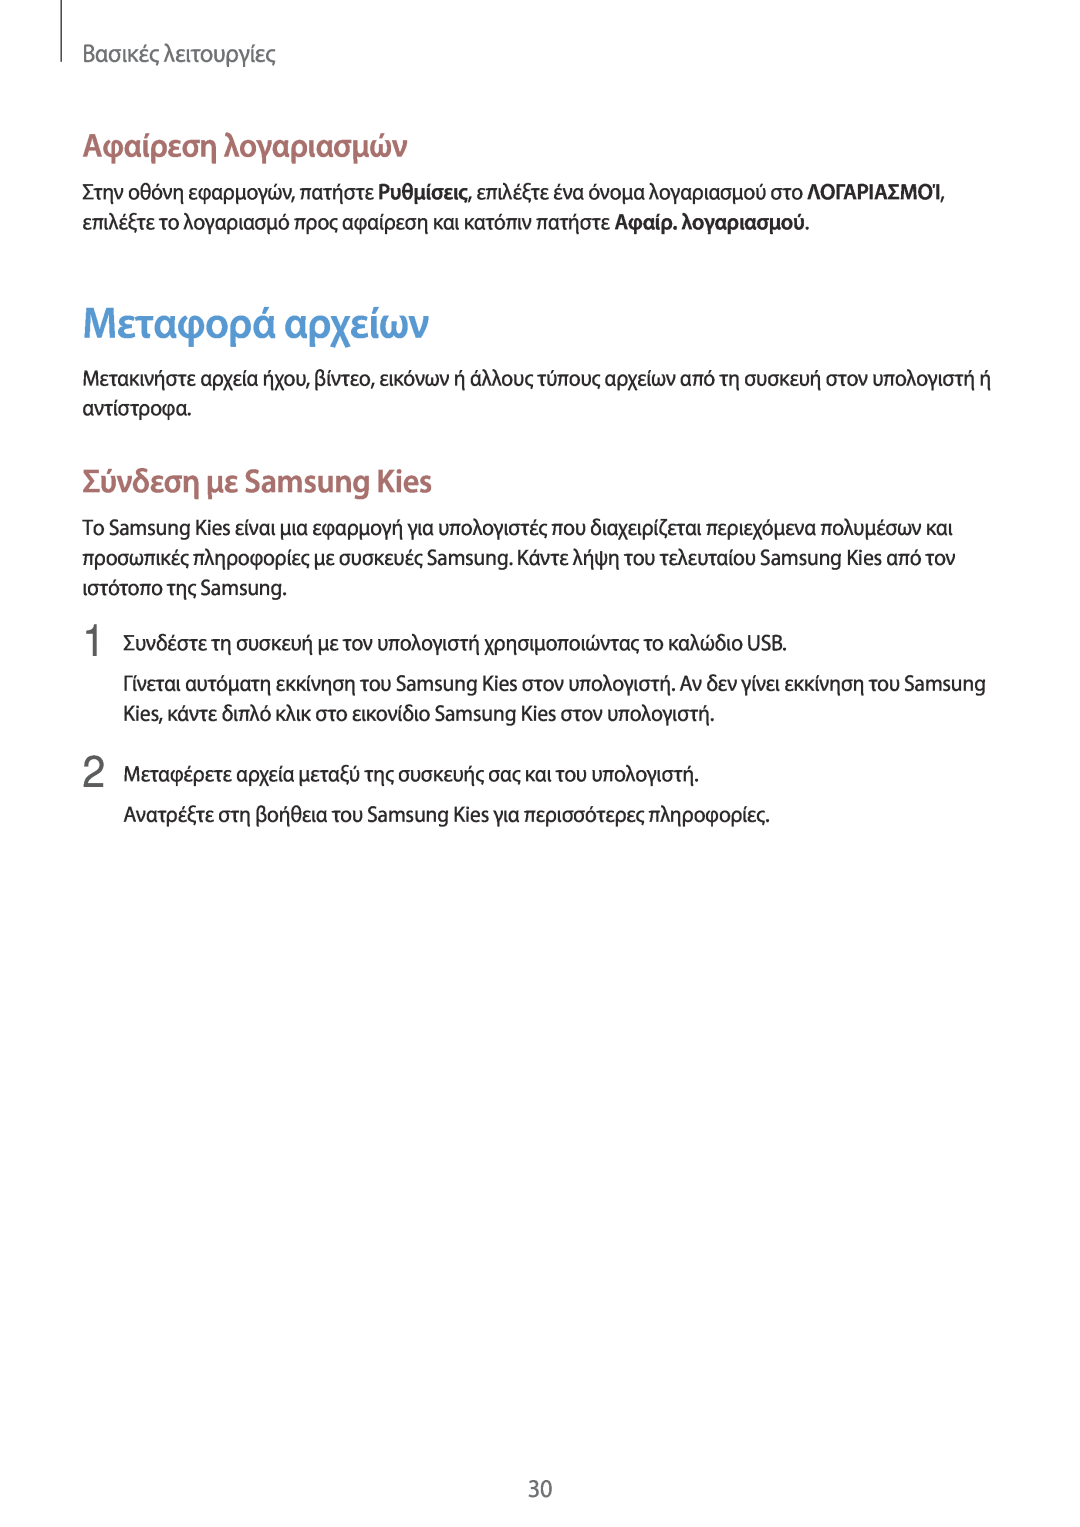 Samsung GT-P5210MKAEUR manual Μεταφορά αρχείων, Αφαίρεση λογαριασμών, Σύνδεση με Samsung Kies, Βασικές λειτουργίες 